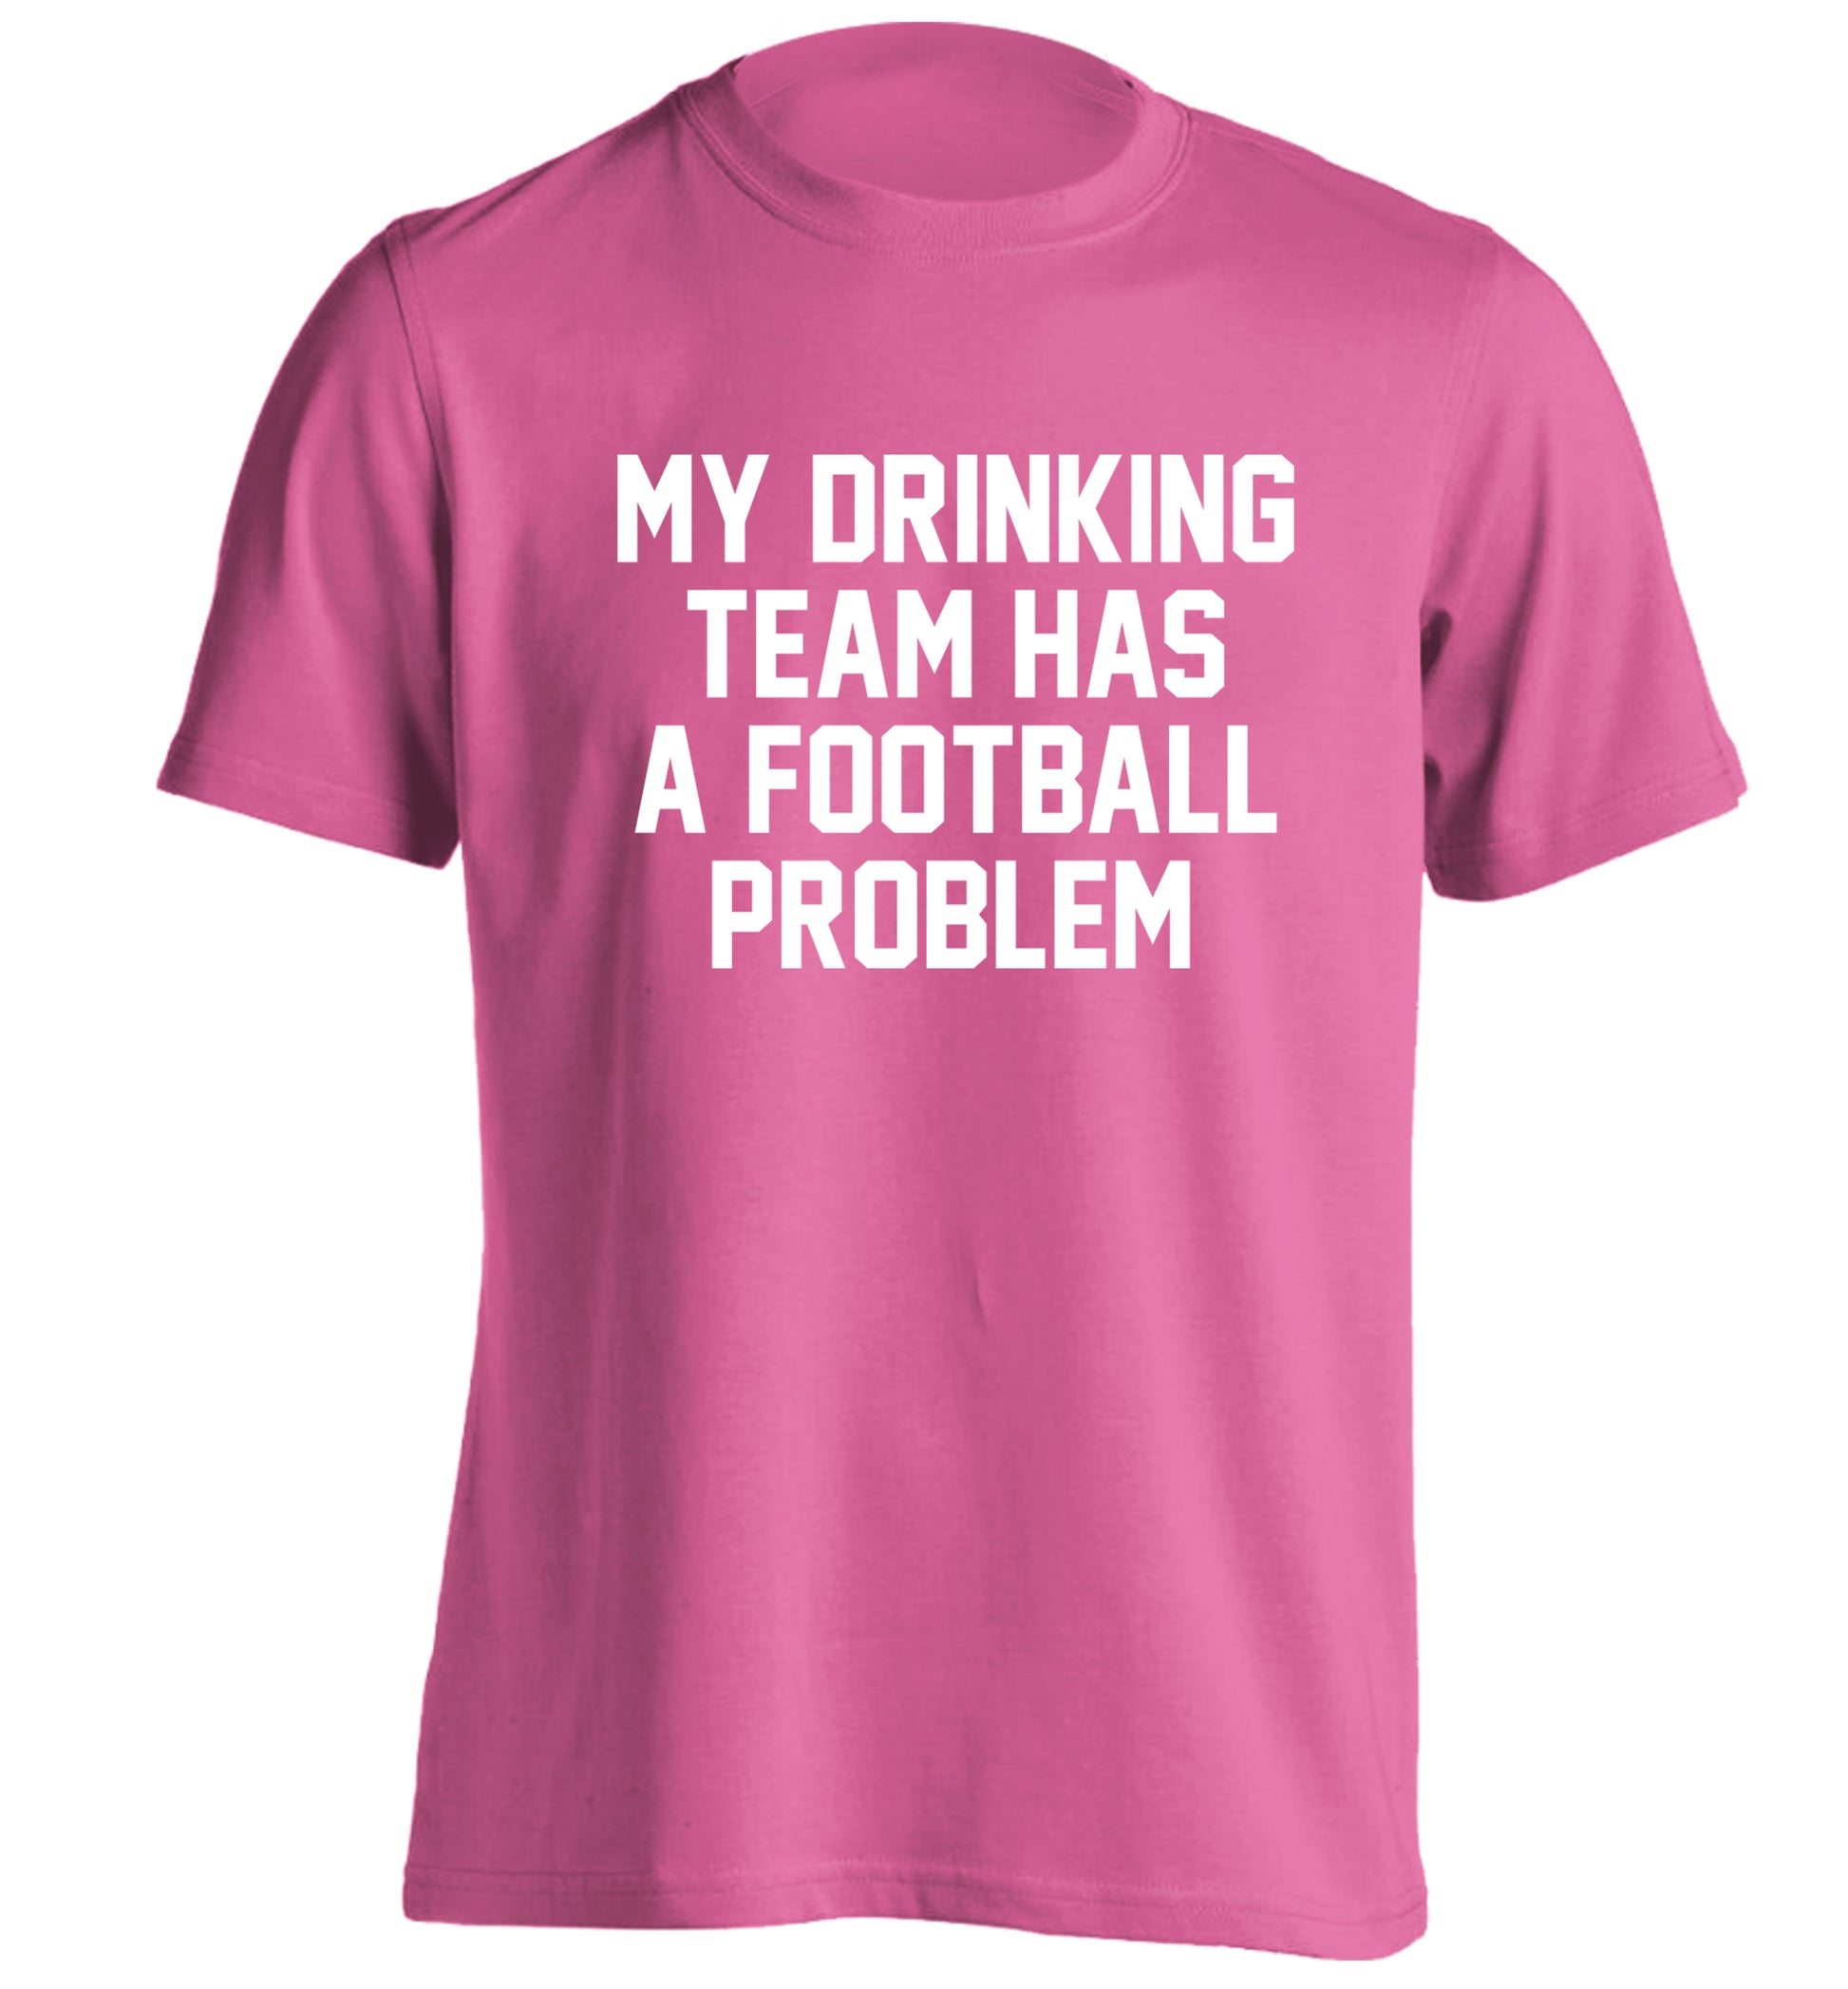 My drinking team has a football problem! adults unisexpink Tshirt 2XL